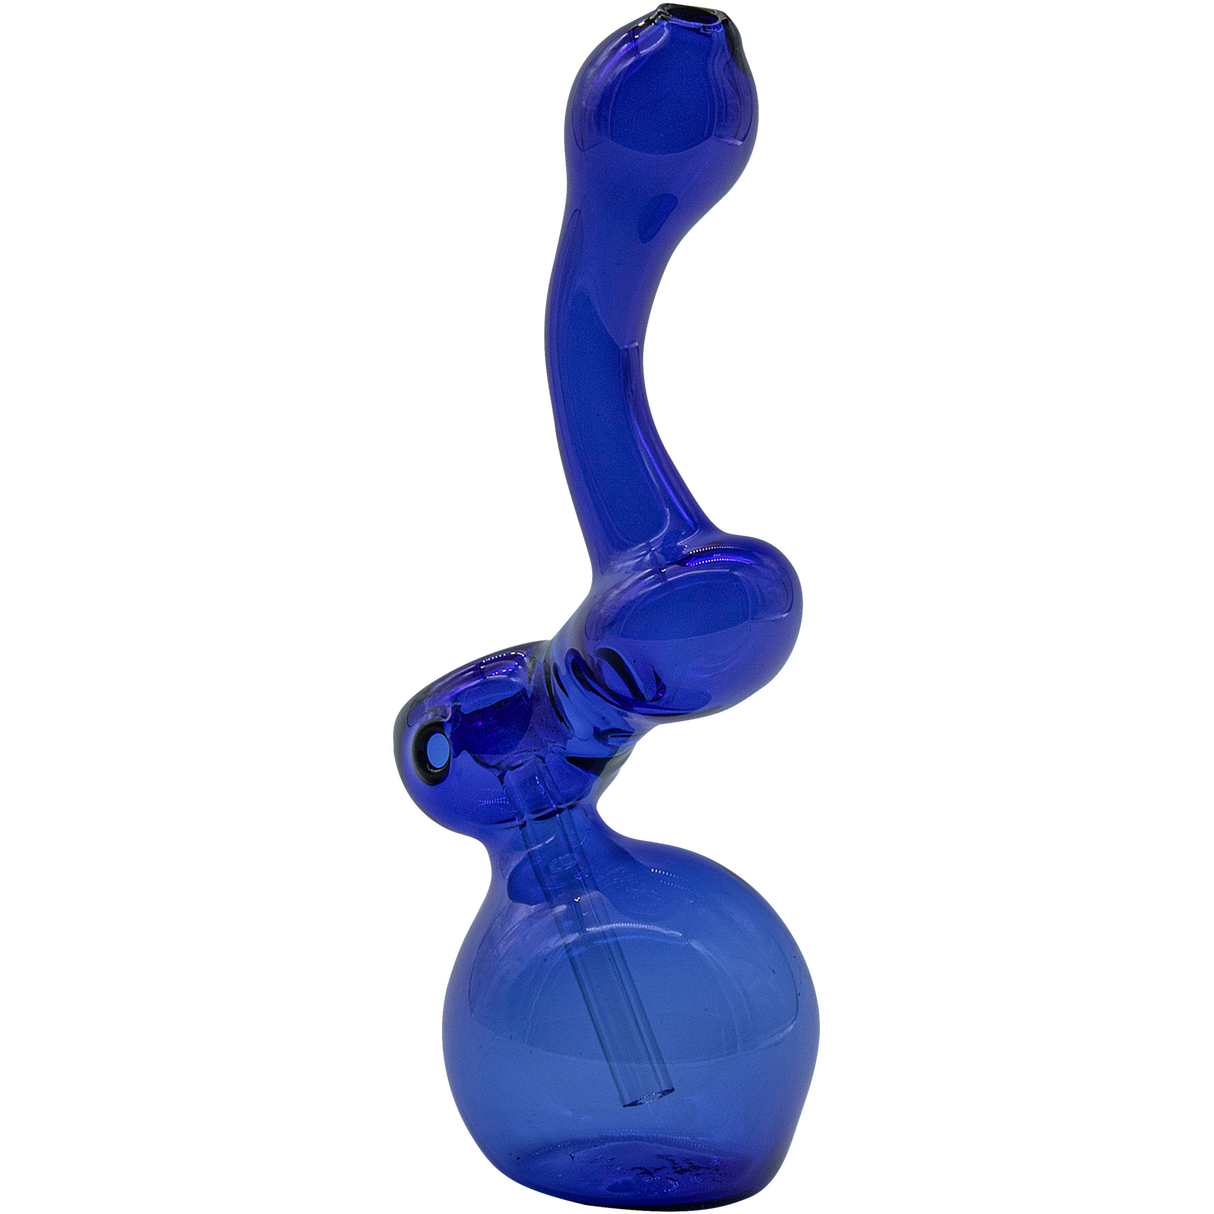 LA Pipes "Sherbub" Blue Glass Sherlock Bubbler Pipe - 6" Height, Borosilicate, USA Made